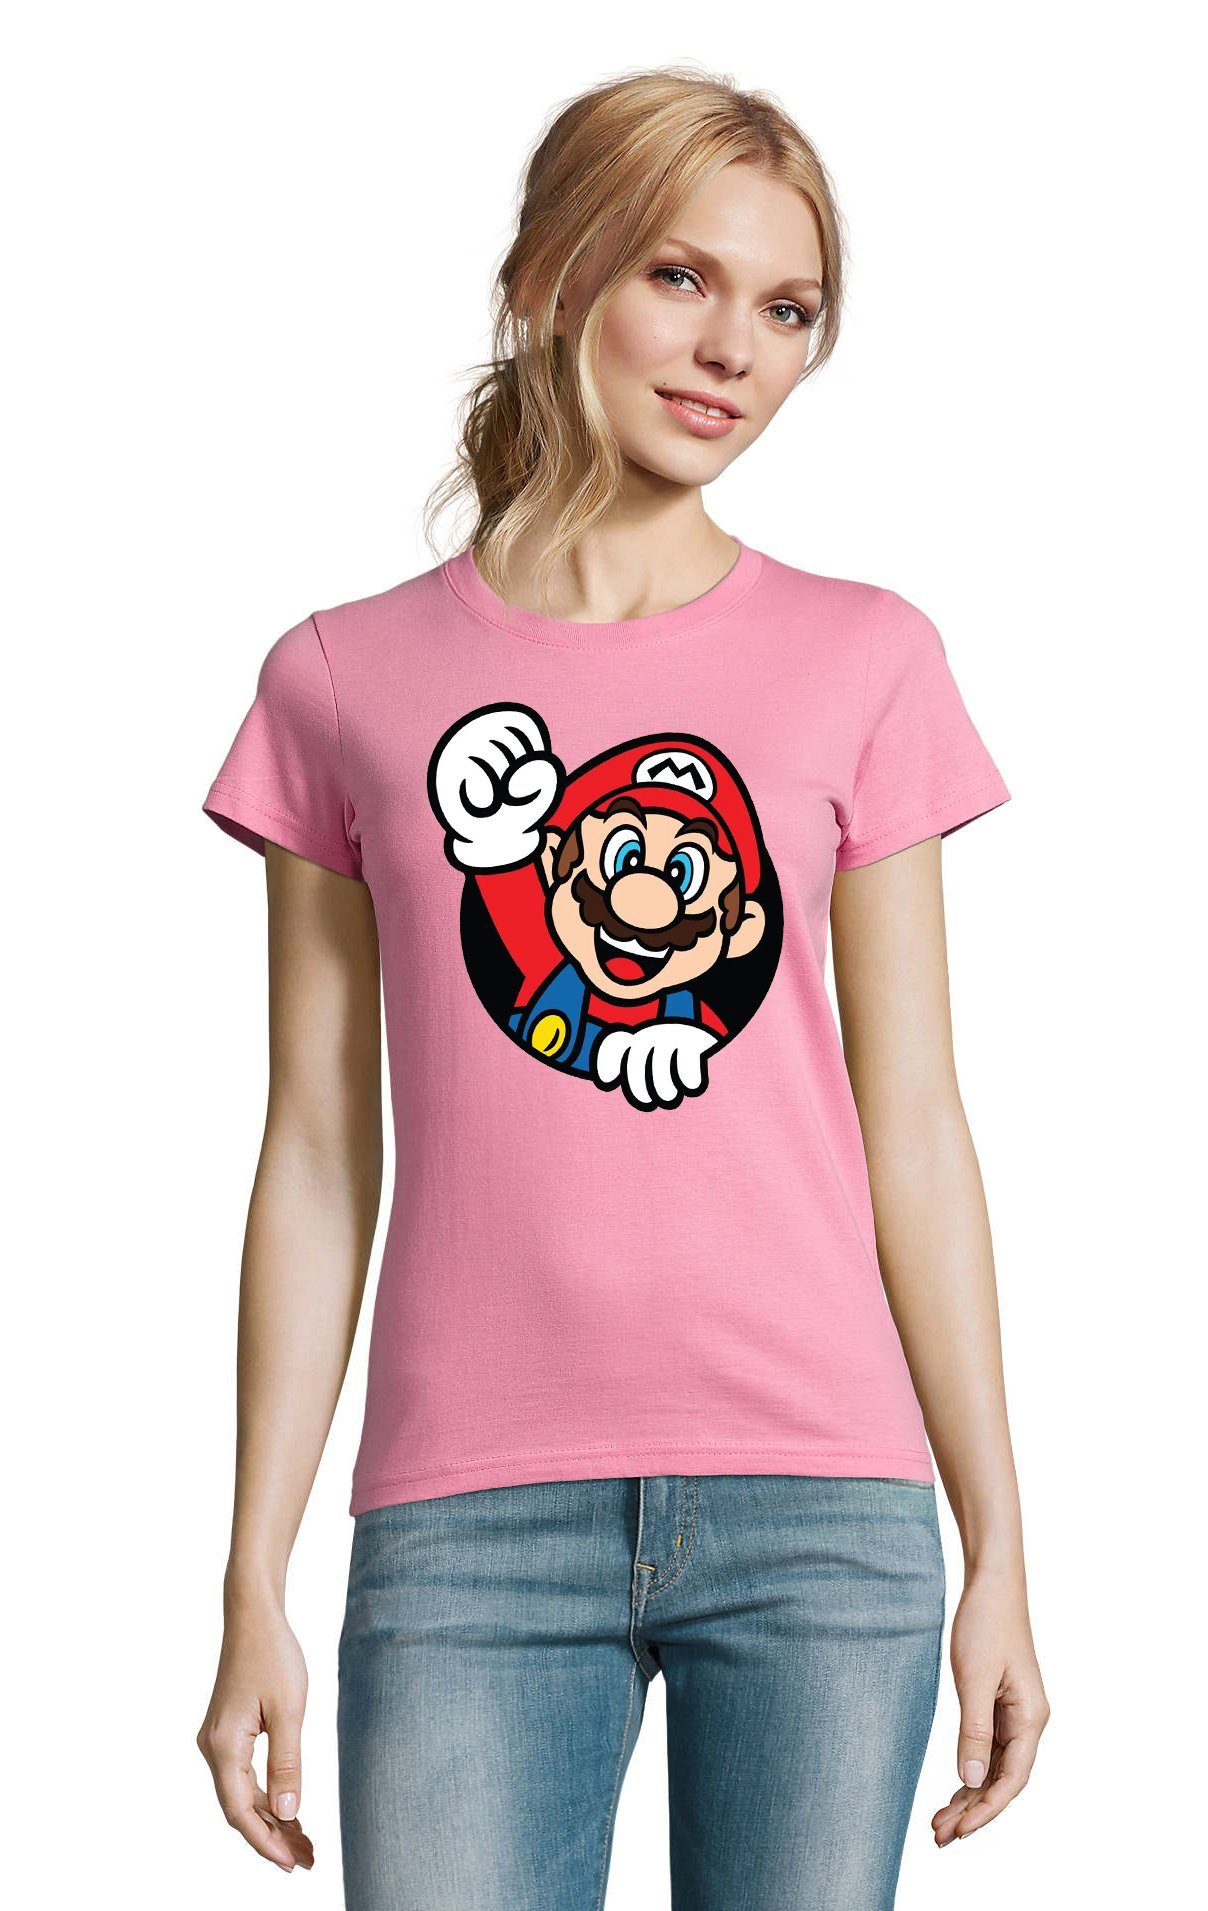 Blondie & Brownie T-Shirt Damen Super Mario Faust Nerd Konsole Gaming Spiel Nintendo Rosa